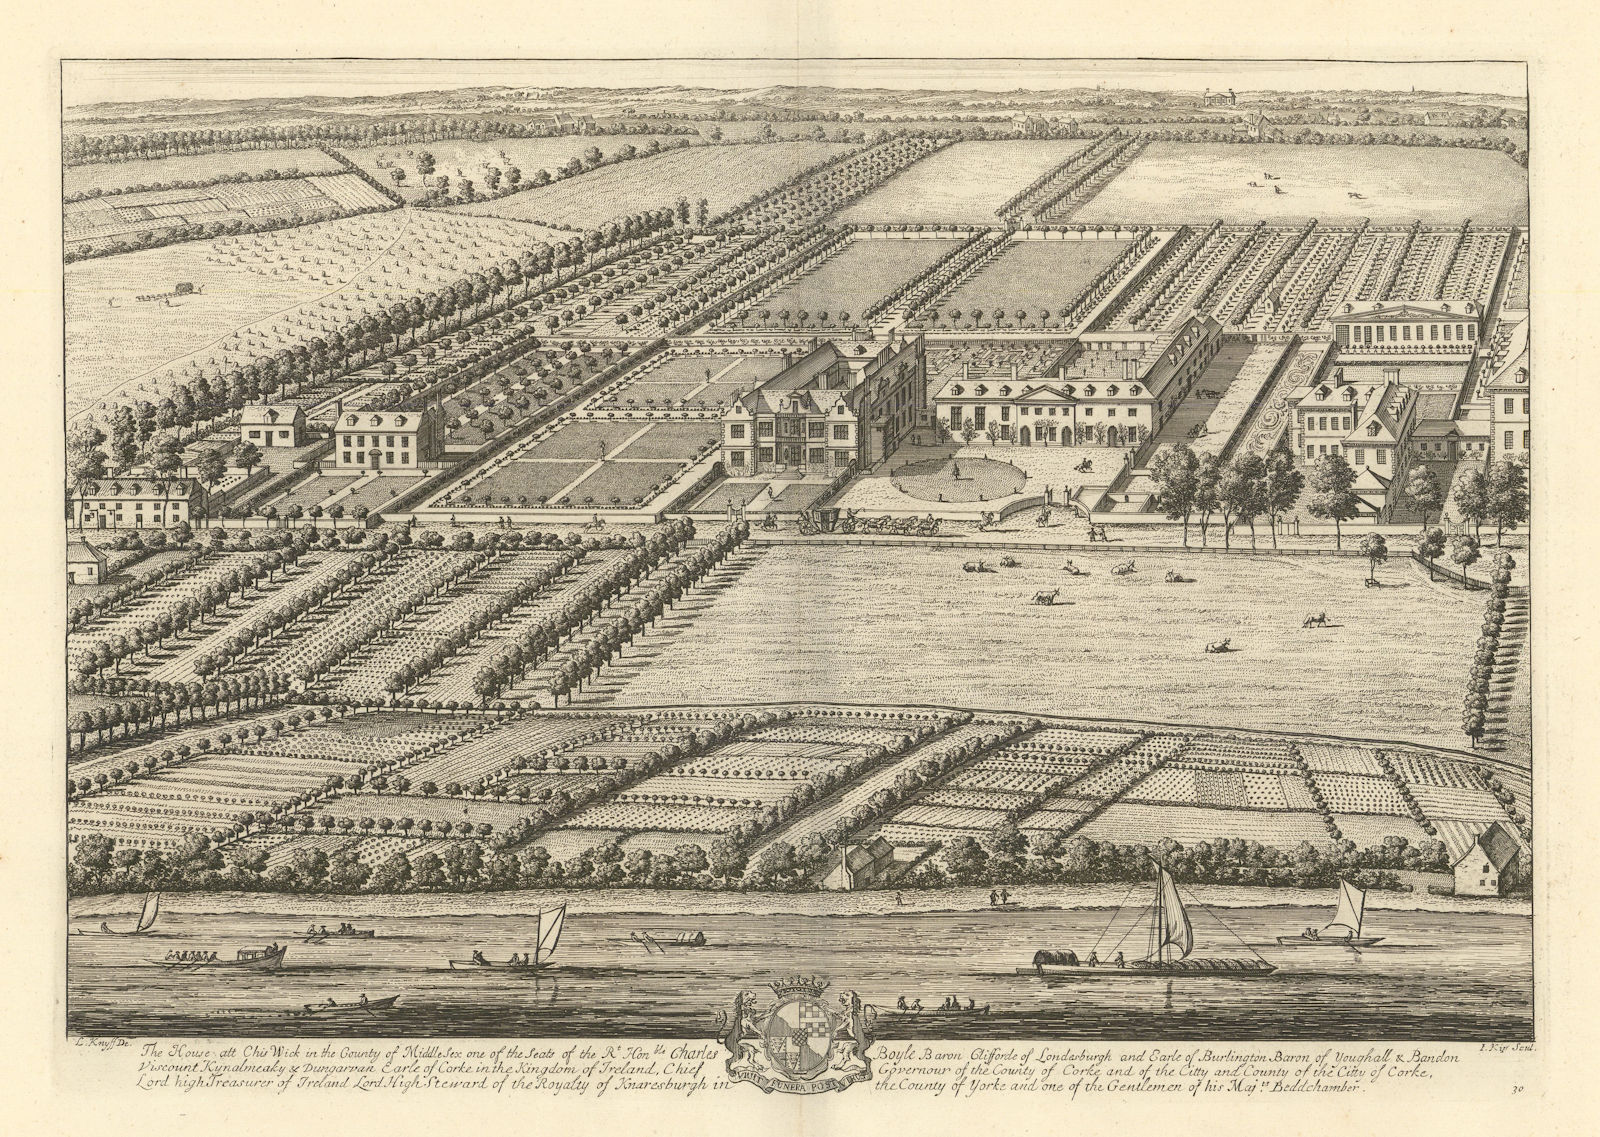 Chiswick House, London. Kip & Knyff. "The House att Chis Wick". Burlington 1709